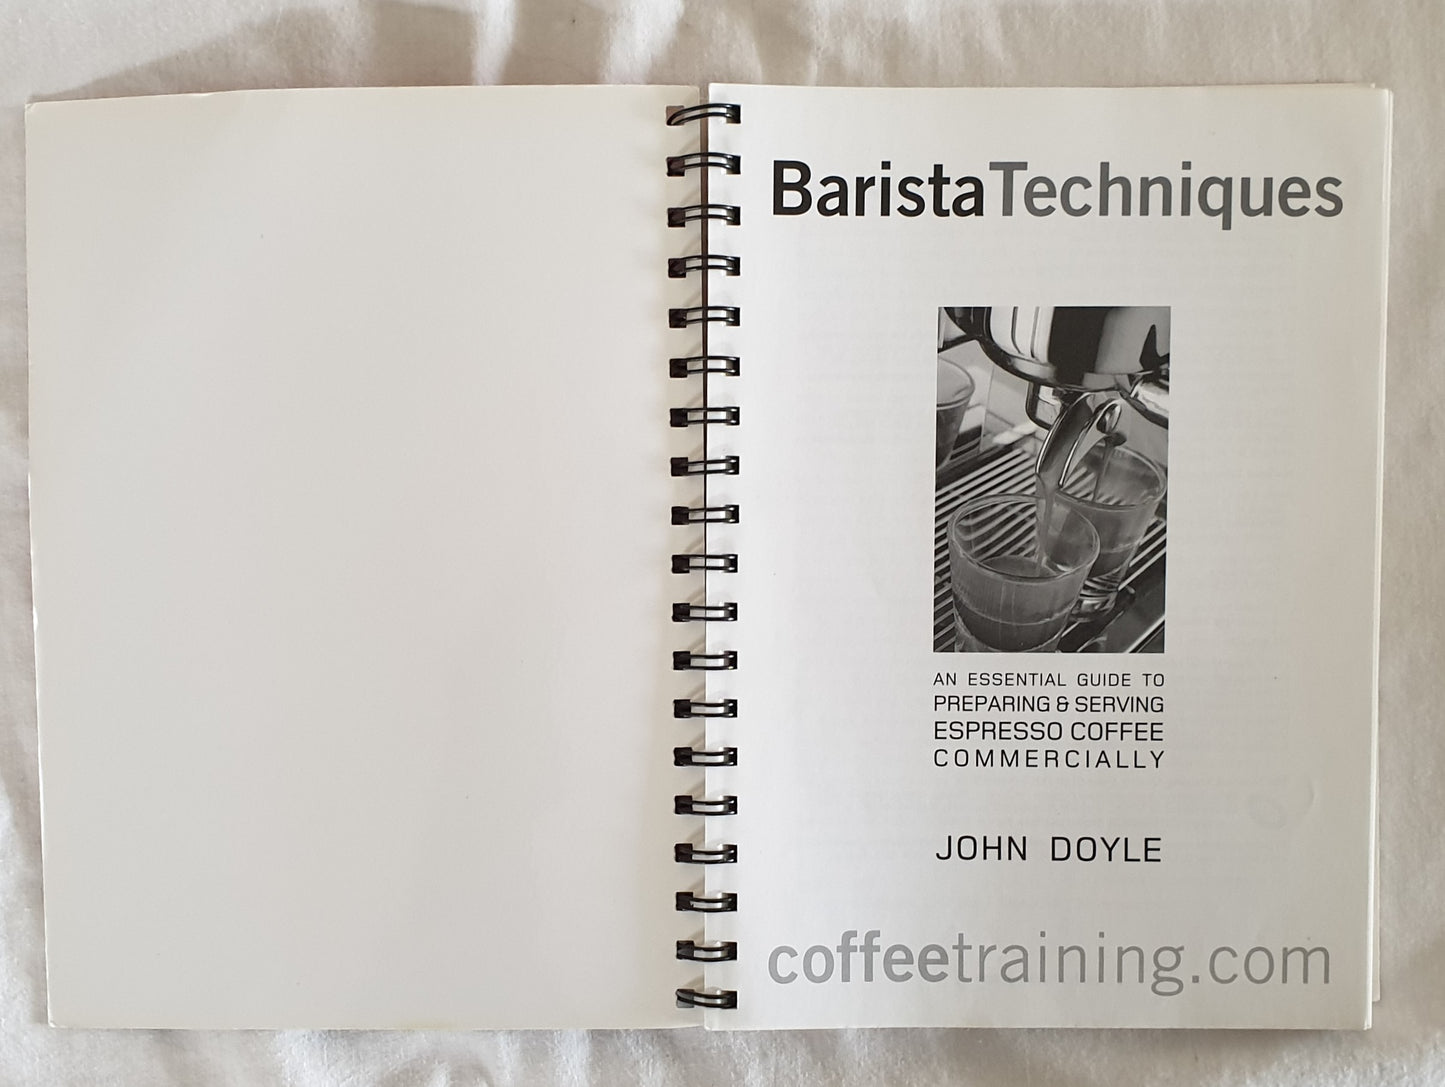 Barista Techniques by John Doyle